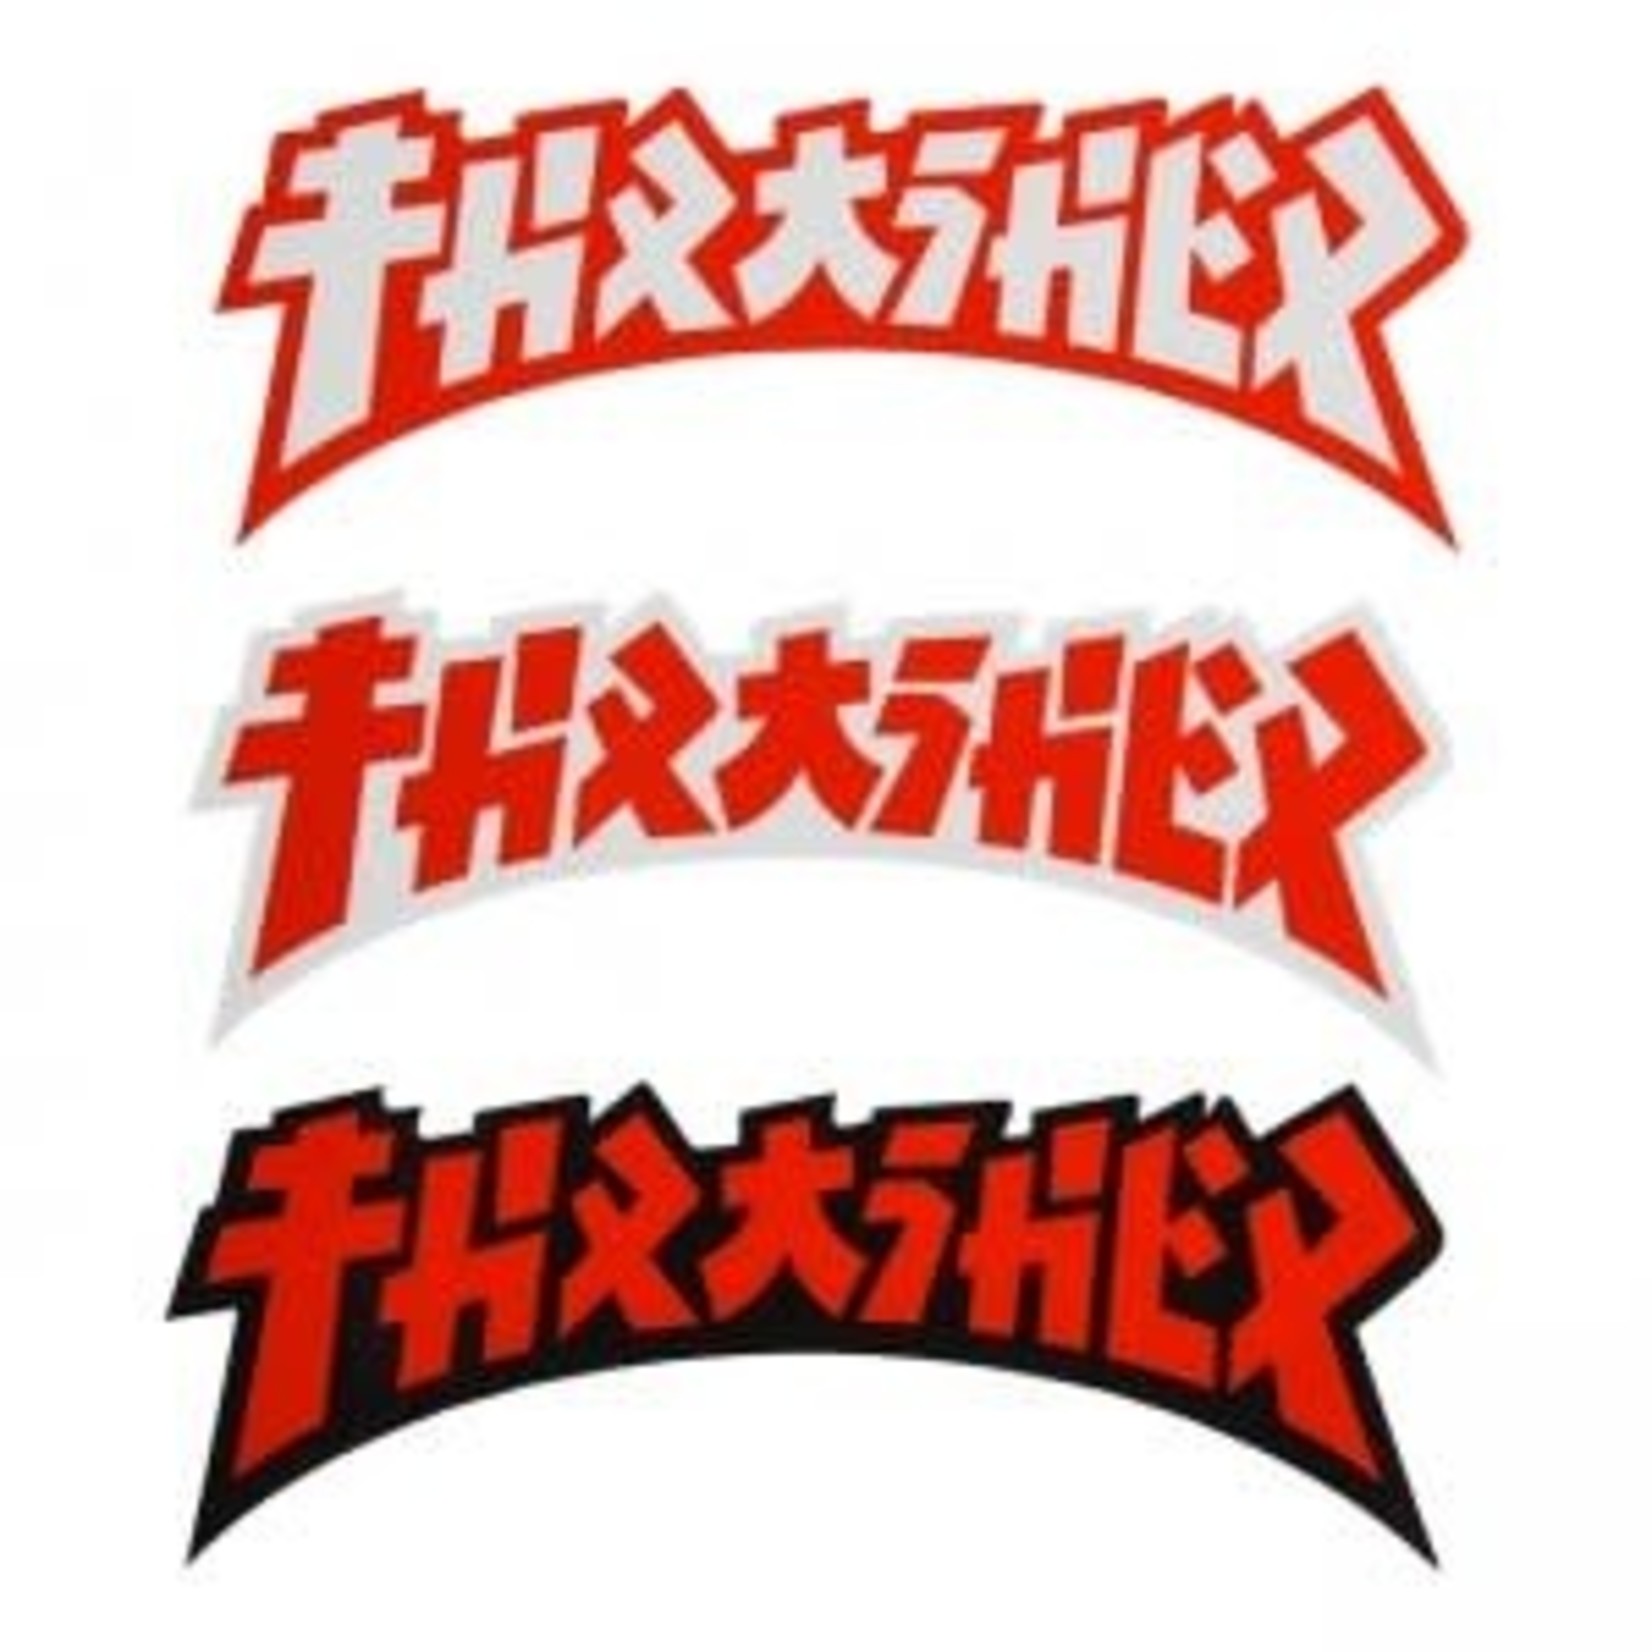 Thrasher Thrasher Godzilla Die Cut Sticker 4" - Asst'd